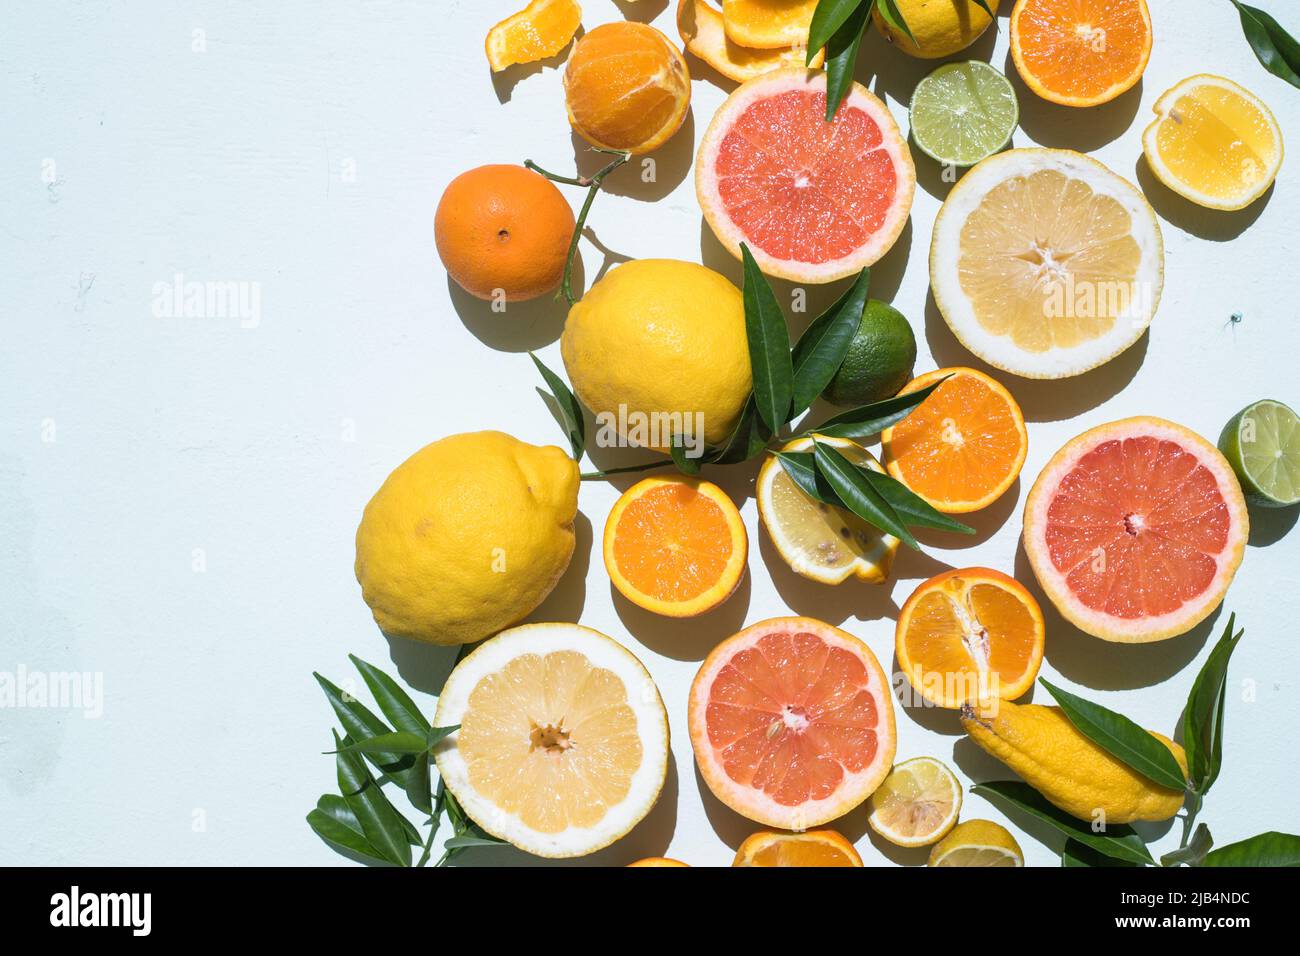 Fruit Lime Orange Lemon Slices Berries Banan Watermelon Metal Storage Tin Box 